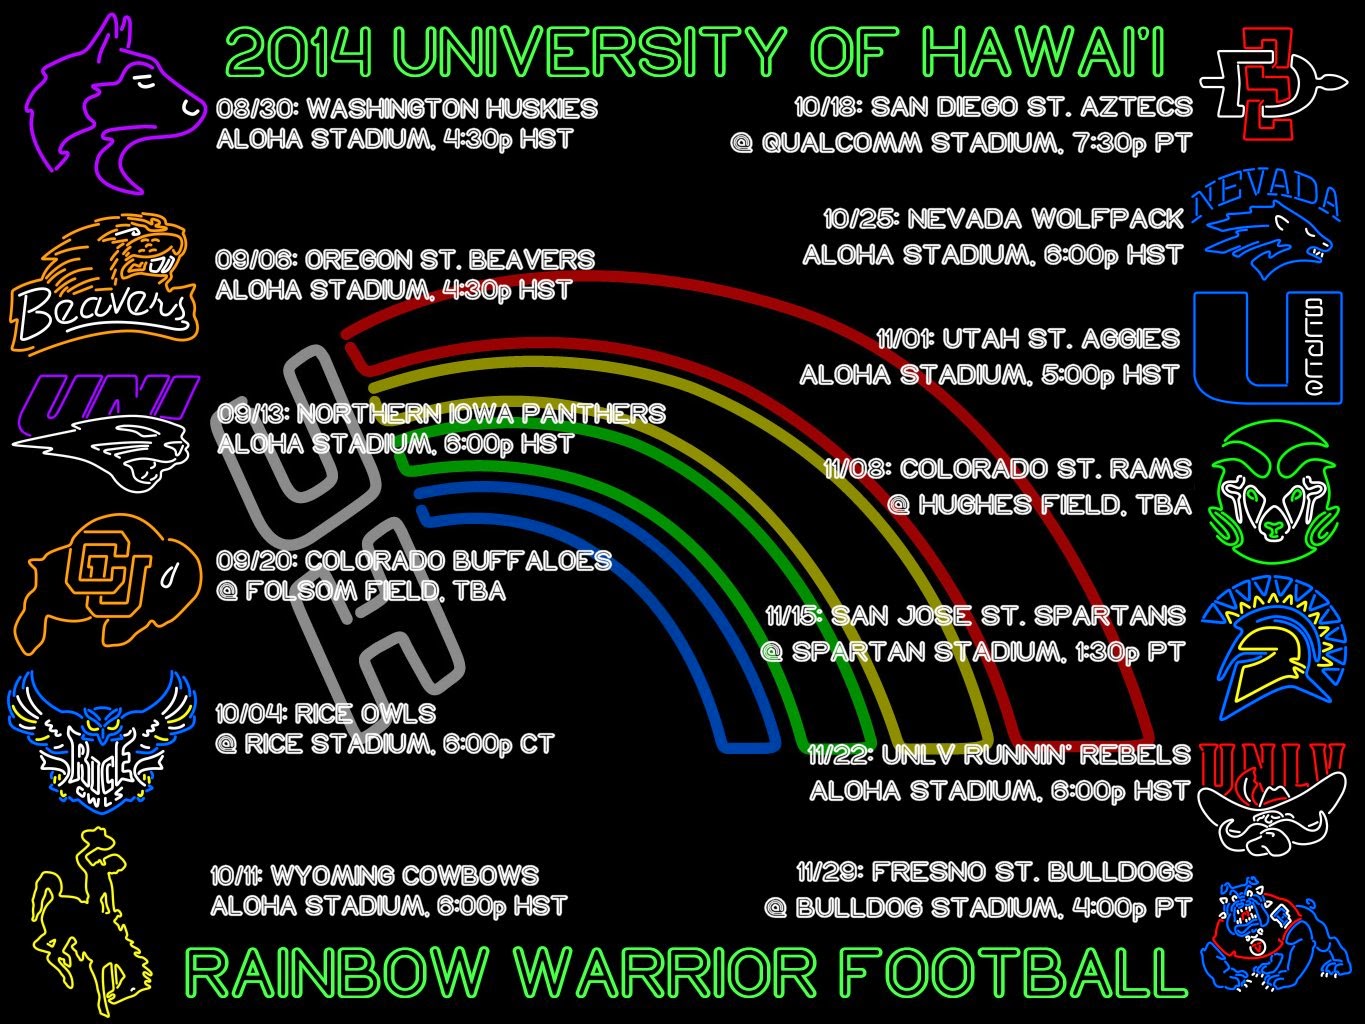  Blog 2014 UNIVERSITY OF HAWAII FOOTBALL SCHEDULE DESKTOP WALLPAPER